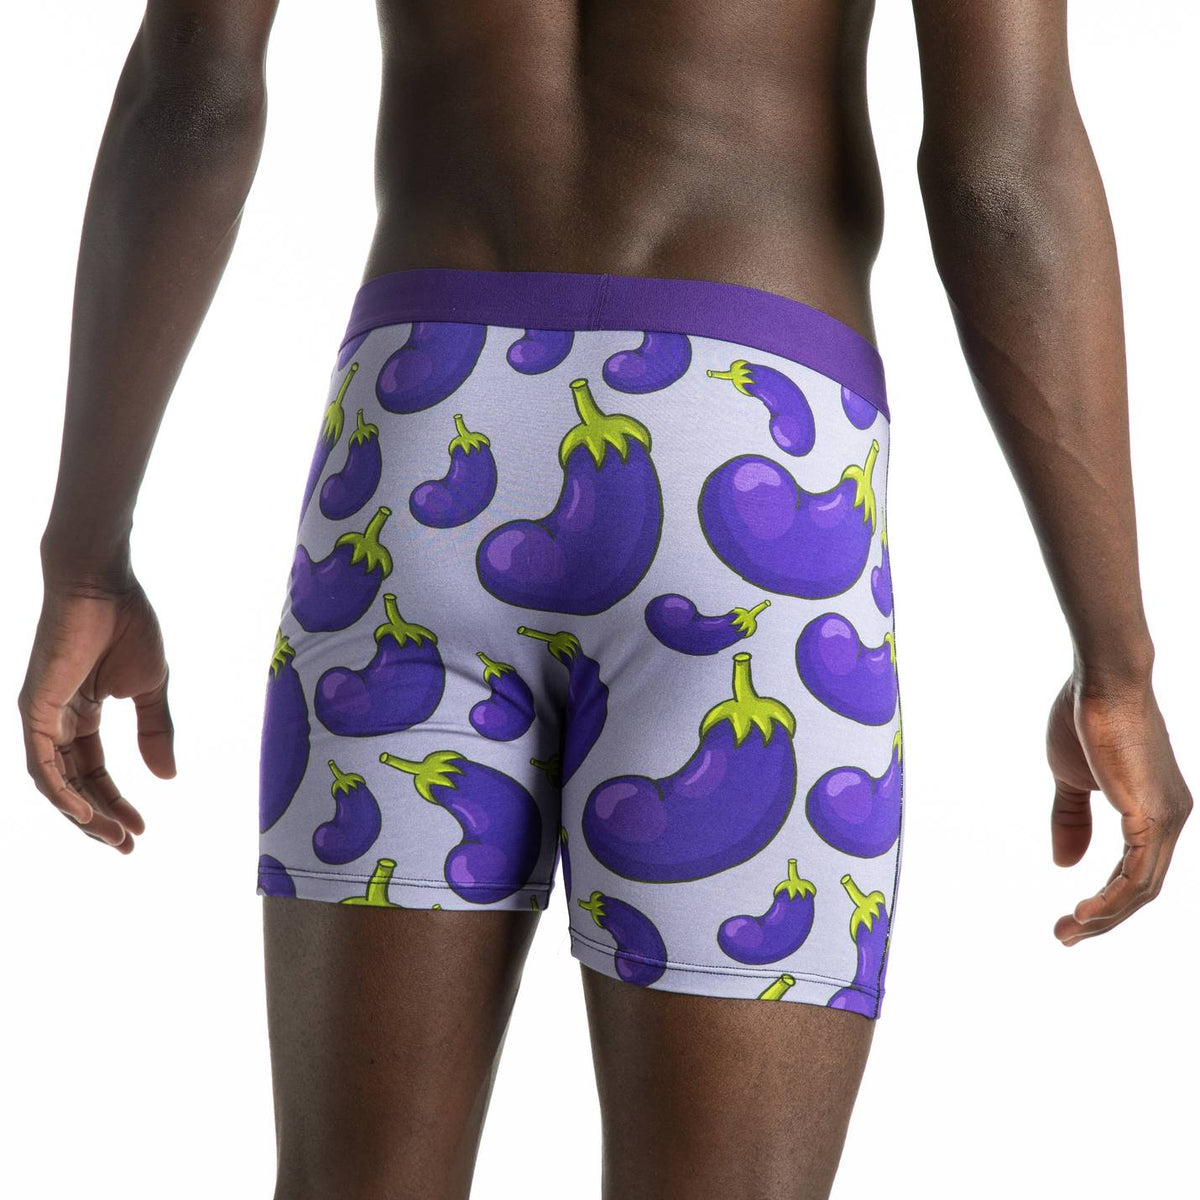 Men's Fruit Of The Loom Underwear Briefs Size Medium:Dark Eggplant Purple